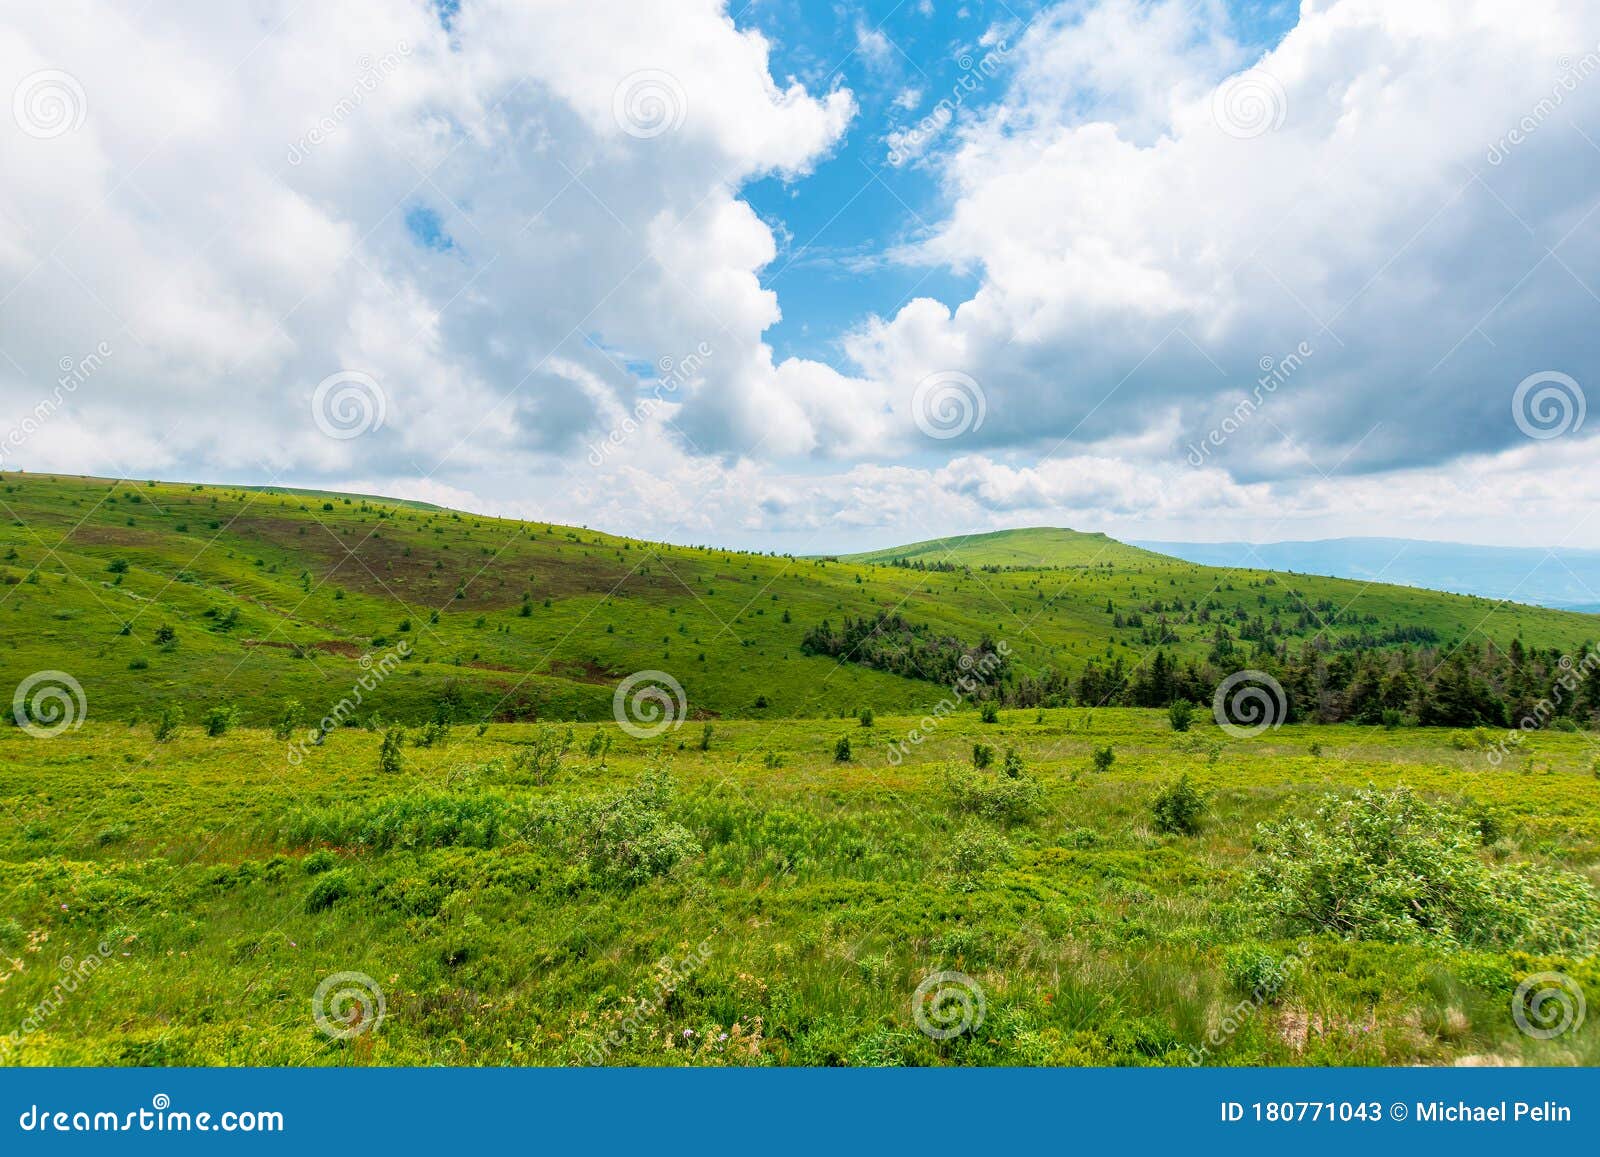 alpine meadows of mnt. runa, ukraine.